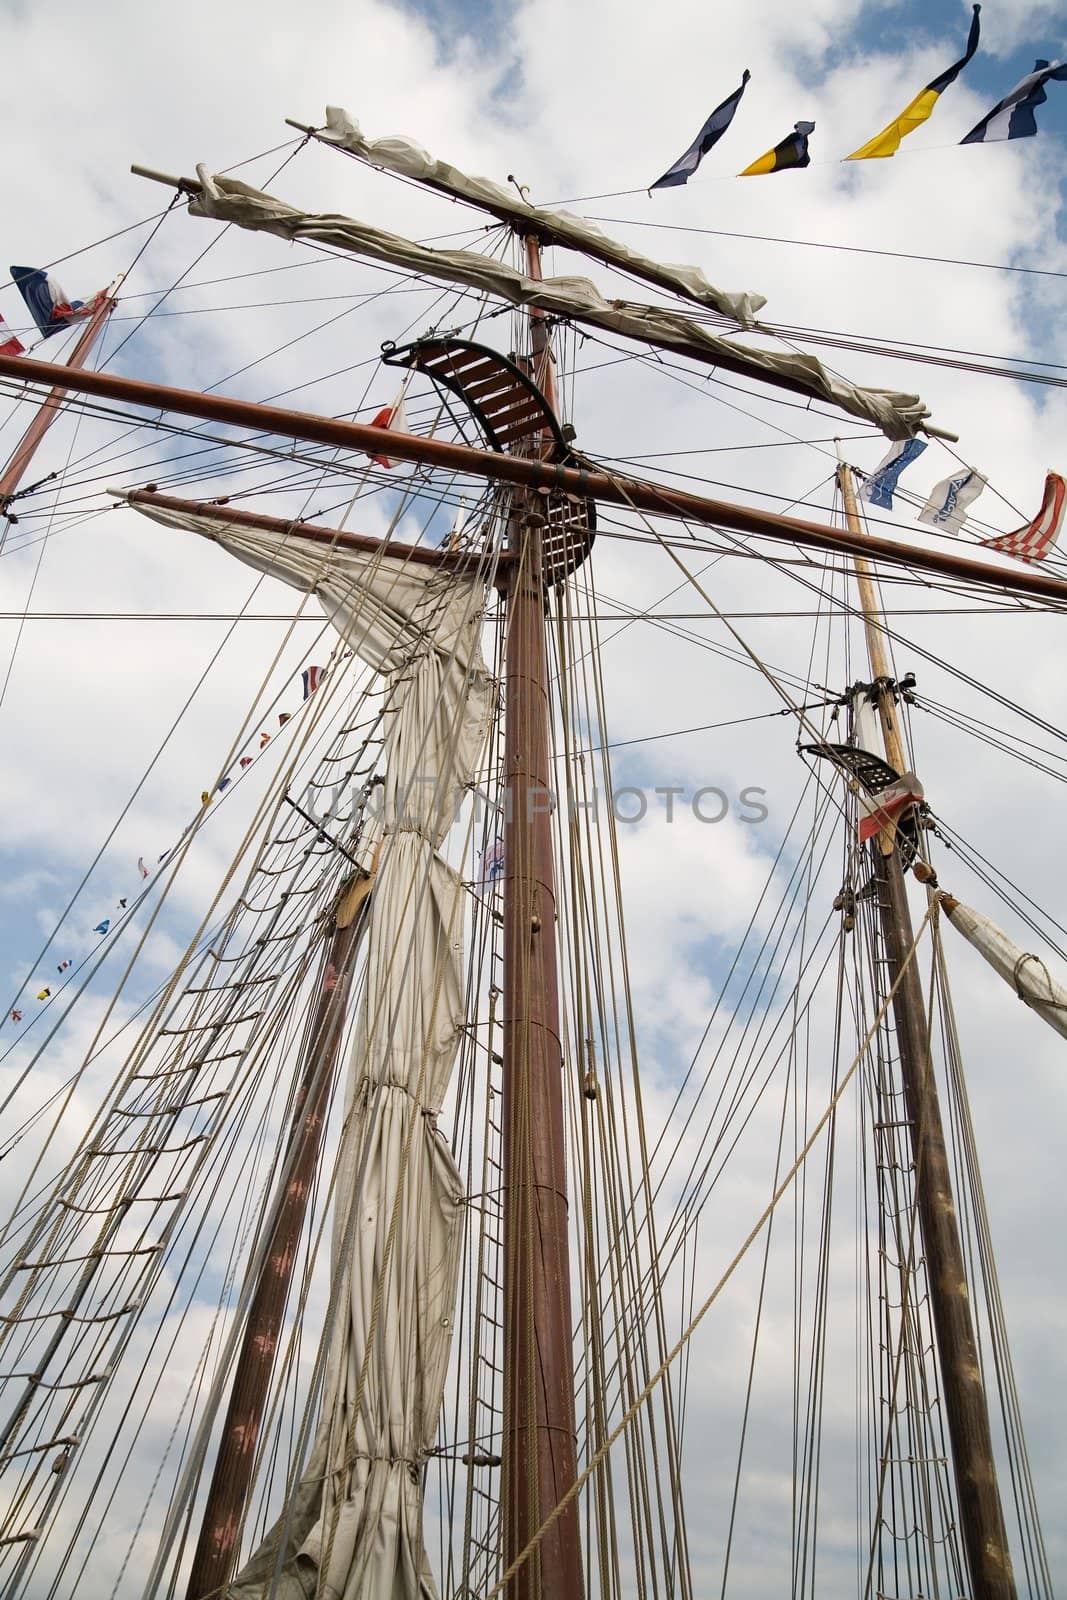 rigging of big sailing ship by furzyk73